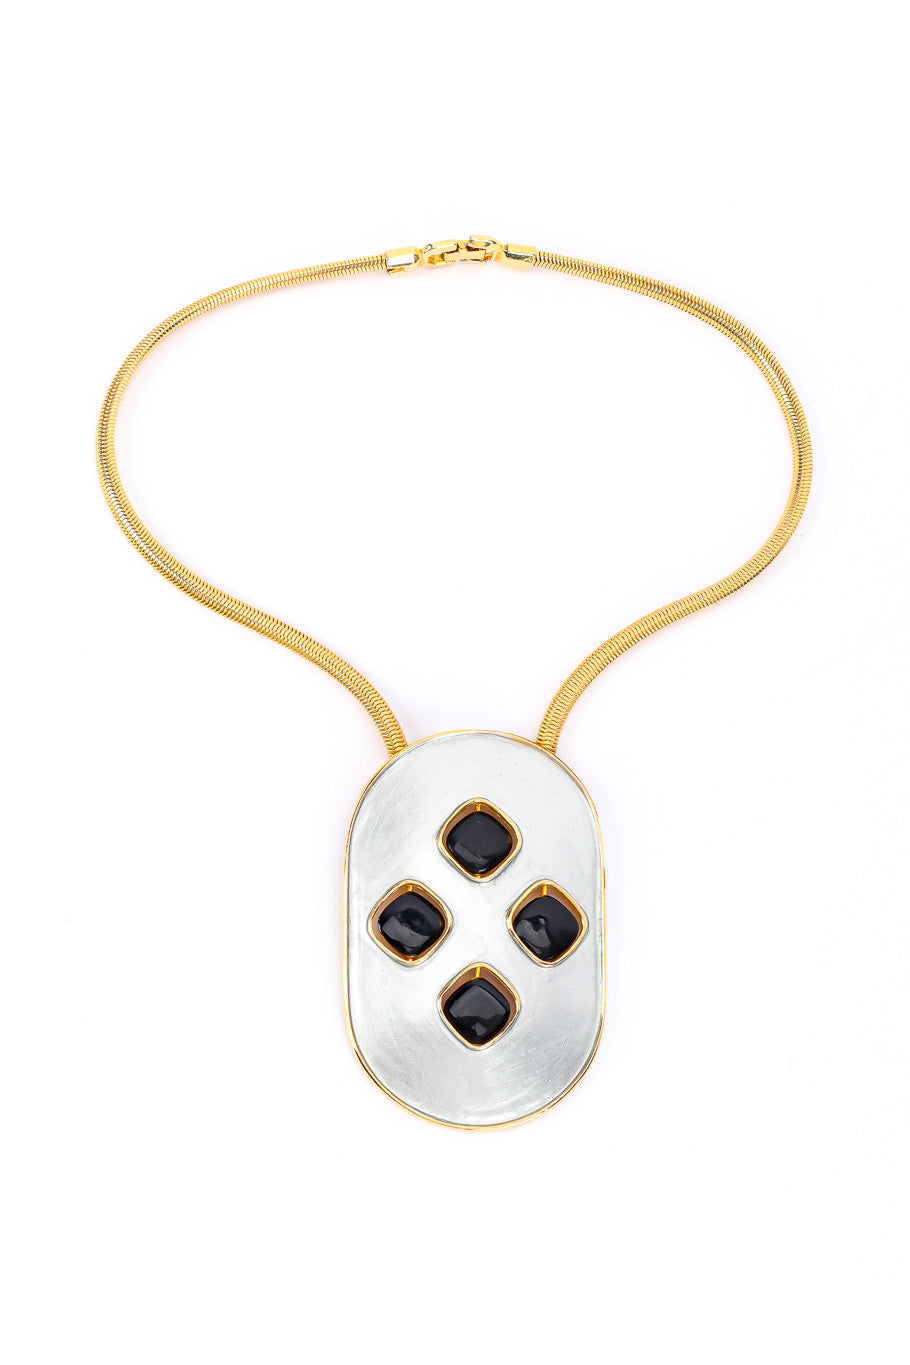 Vintage Pierre Cardin Revolving Charm Tablet Necklace full view @Recessla